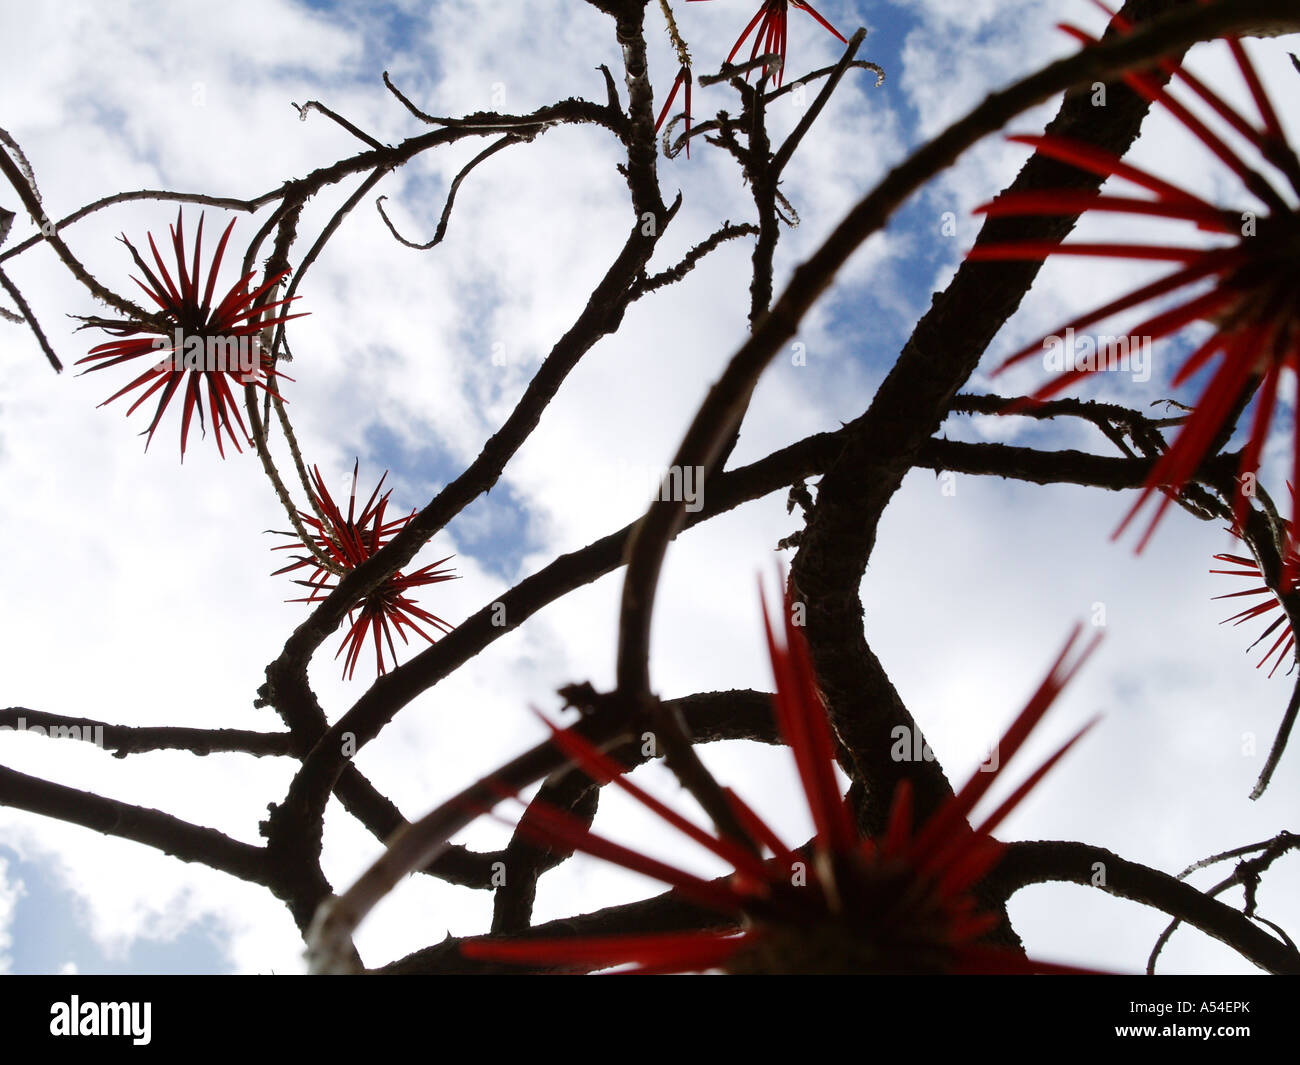 Botanical garden, Coral Tree, Erythrina reticulata, flowerage of Madeira Stock Photo